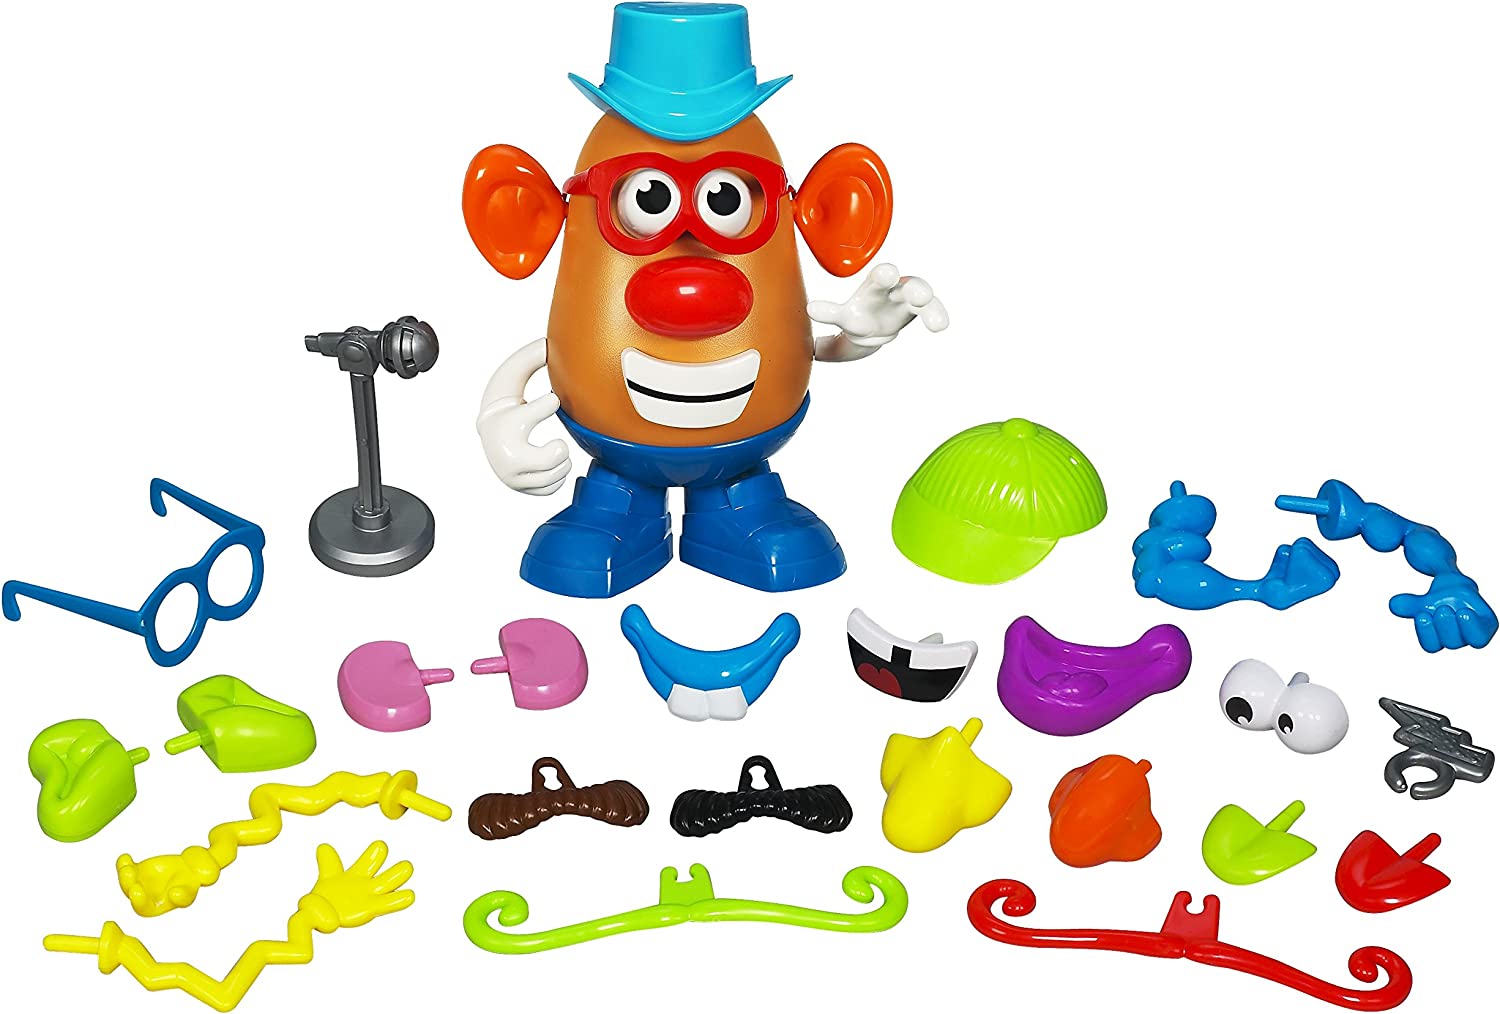 Mr. Potato Head Toy